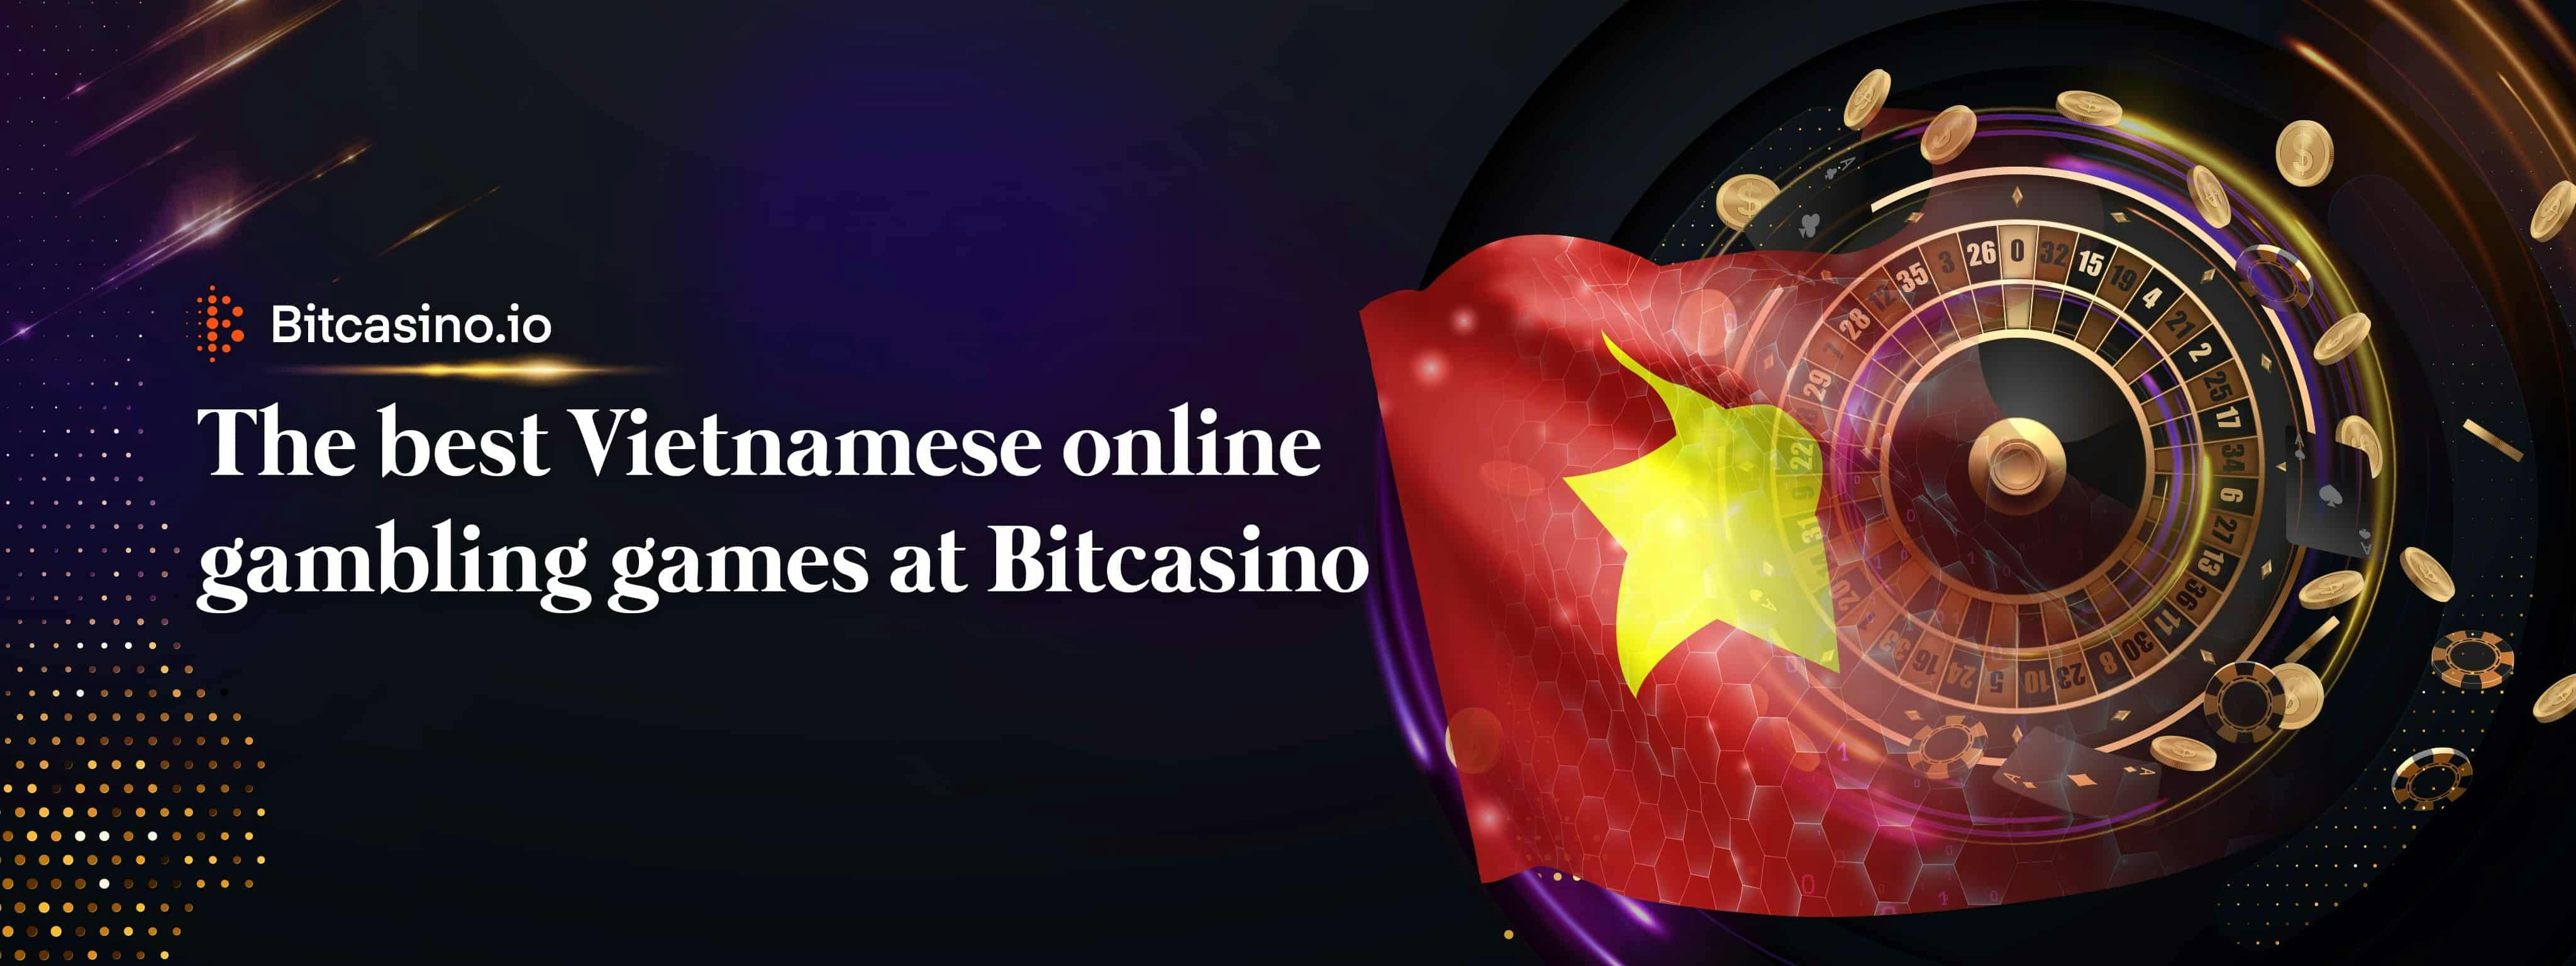 The best Vietnamese online gambling games at Bitcasino